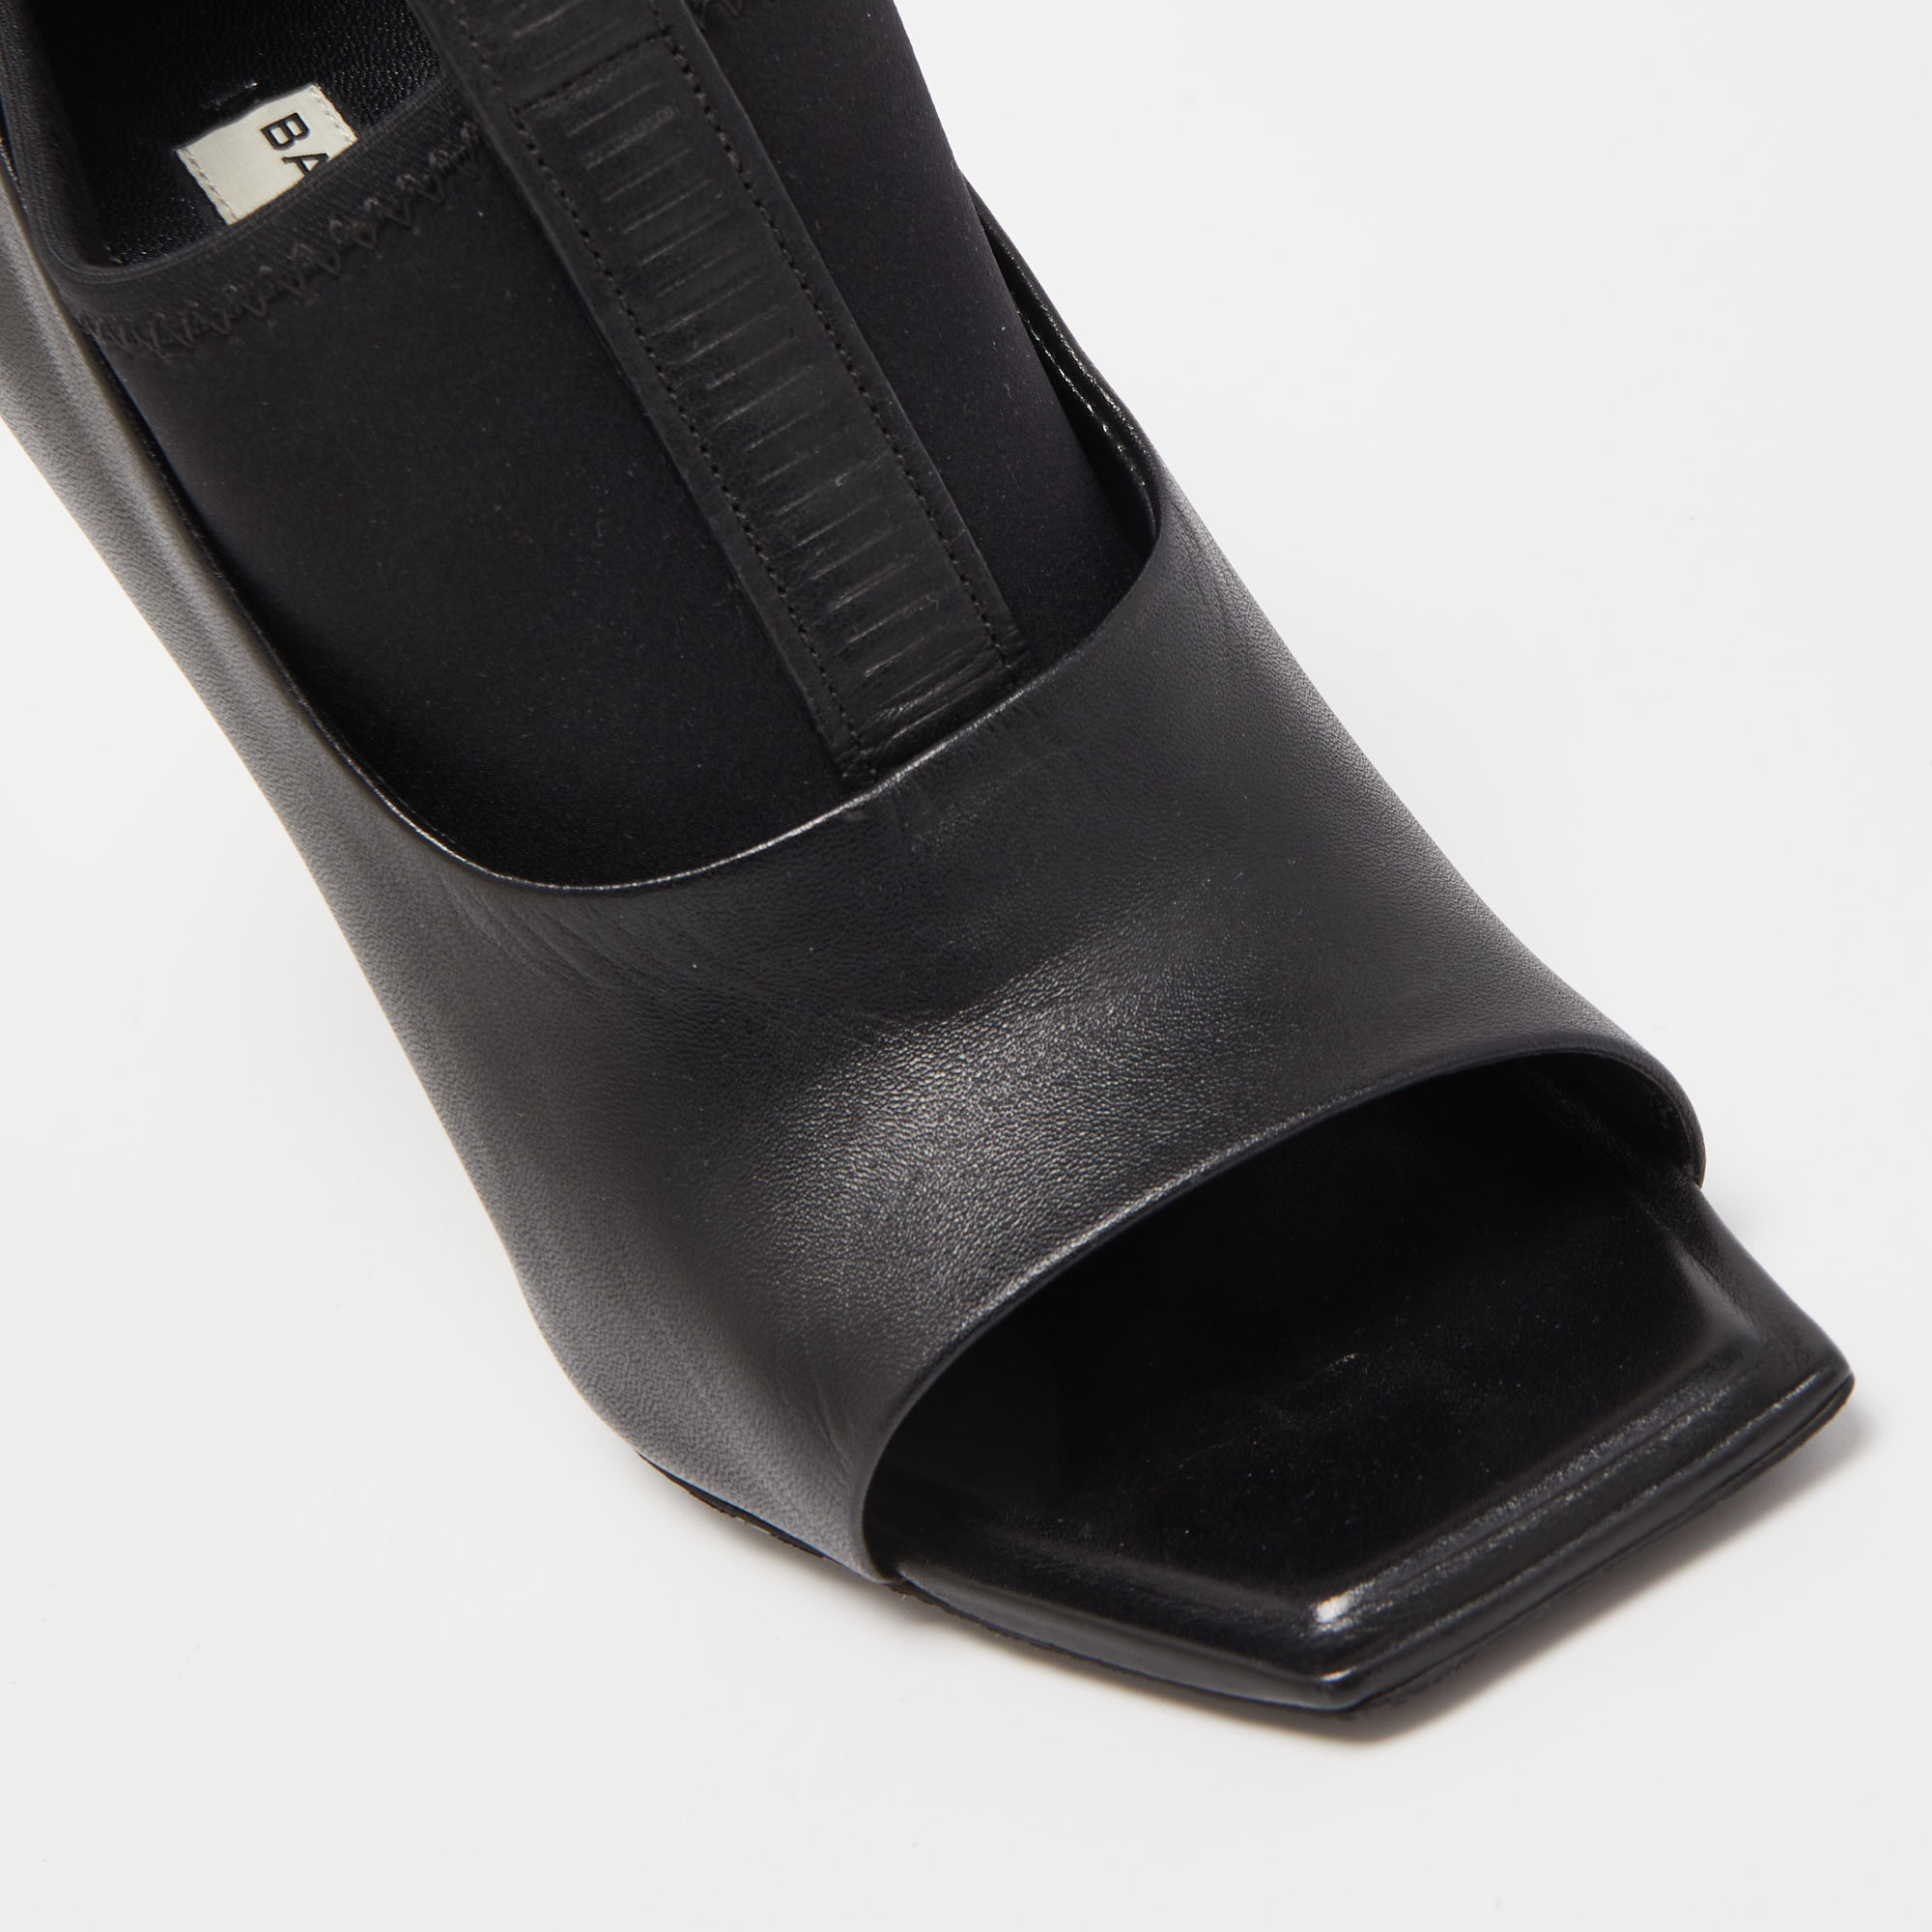 Balenciaga Black Leather Wedge Open Toe Pumps Size 36.5